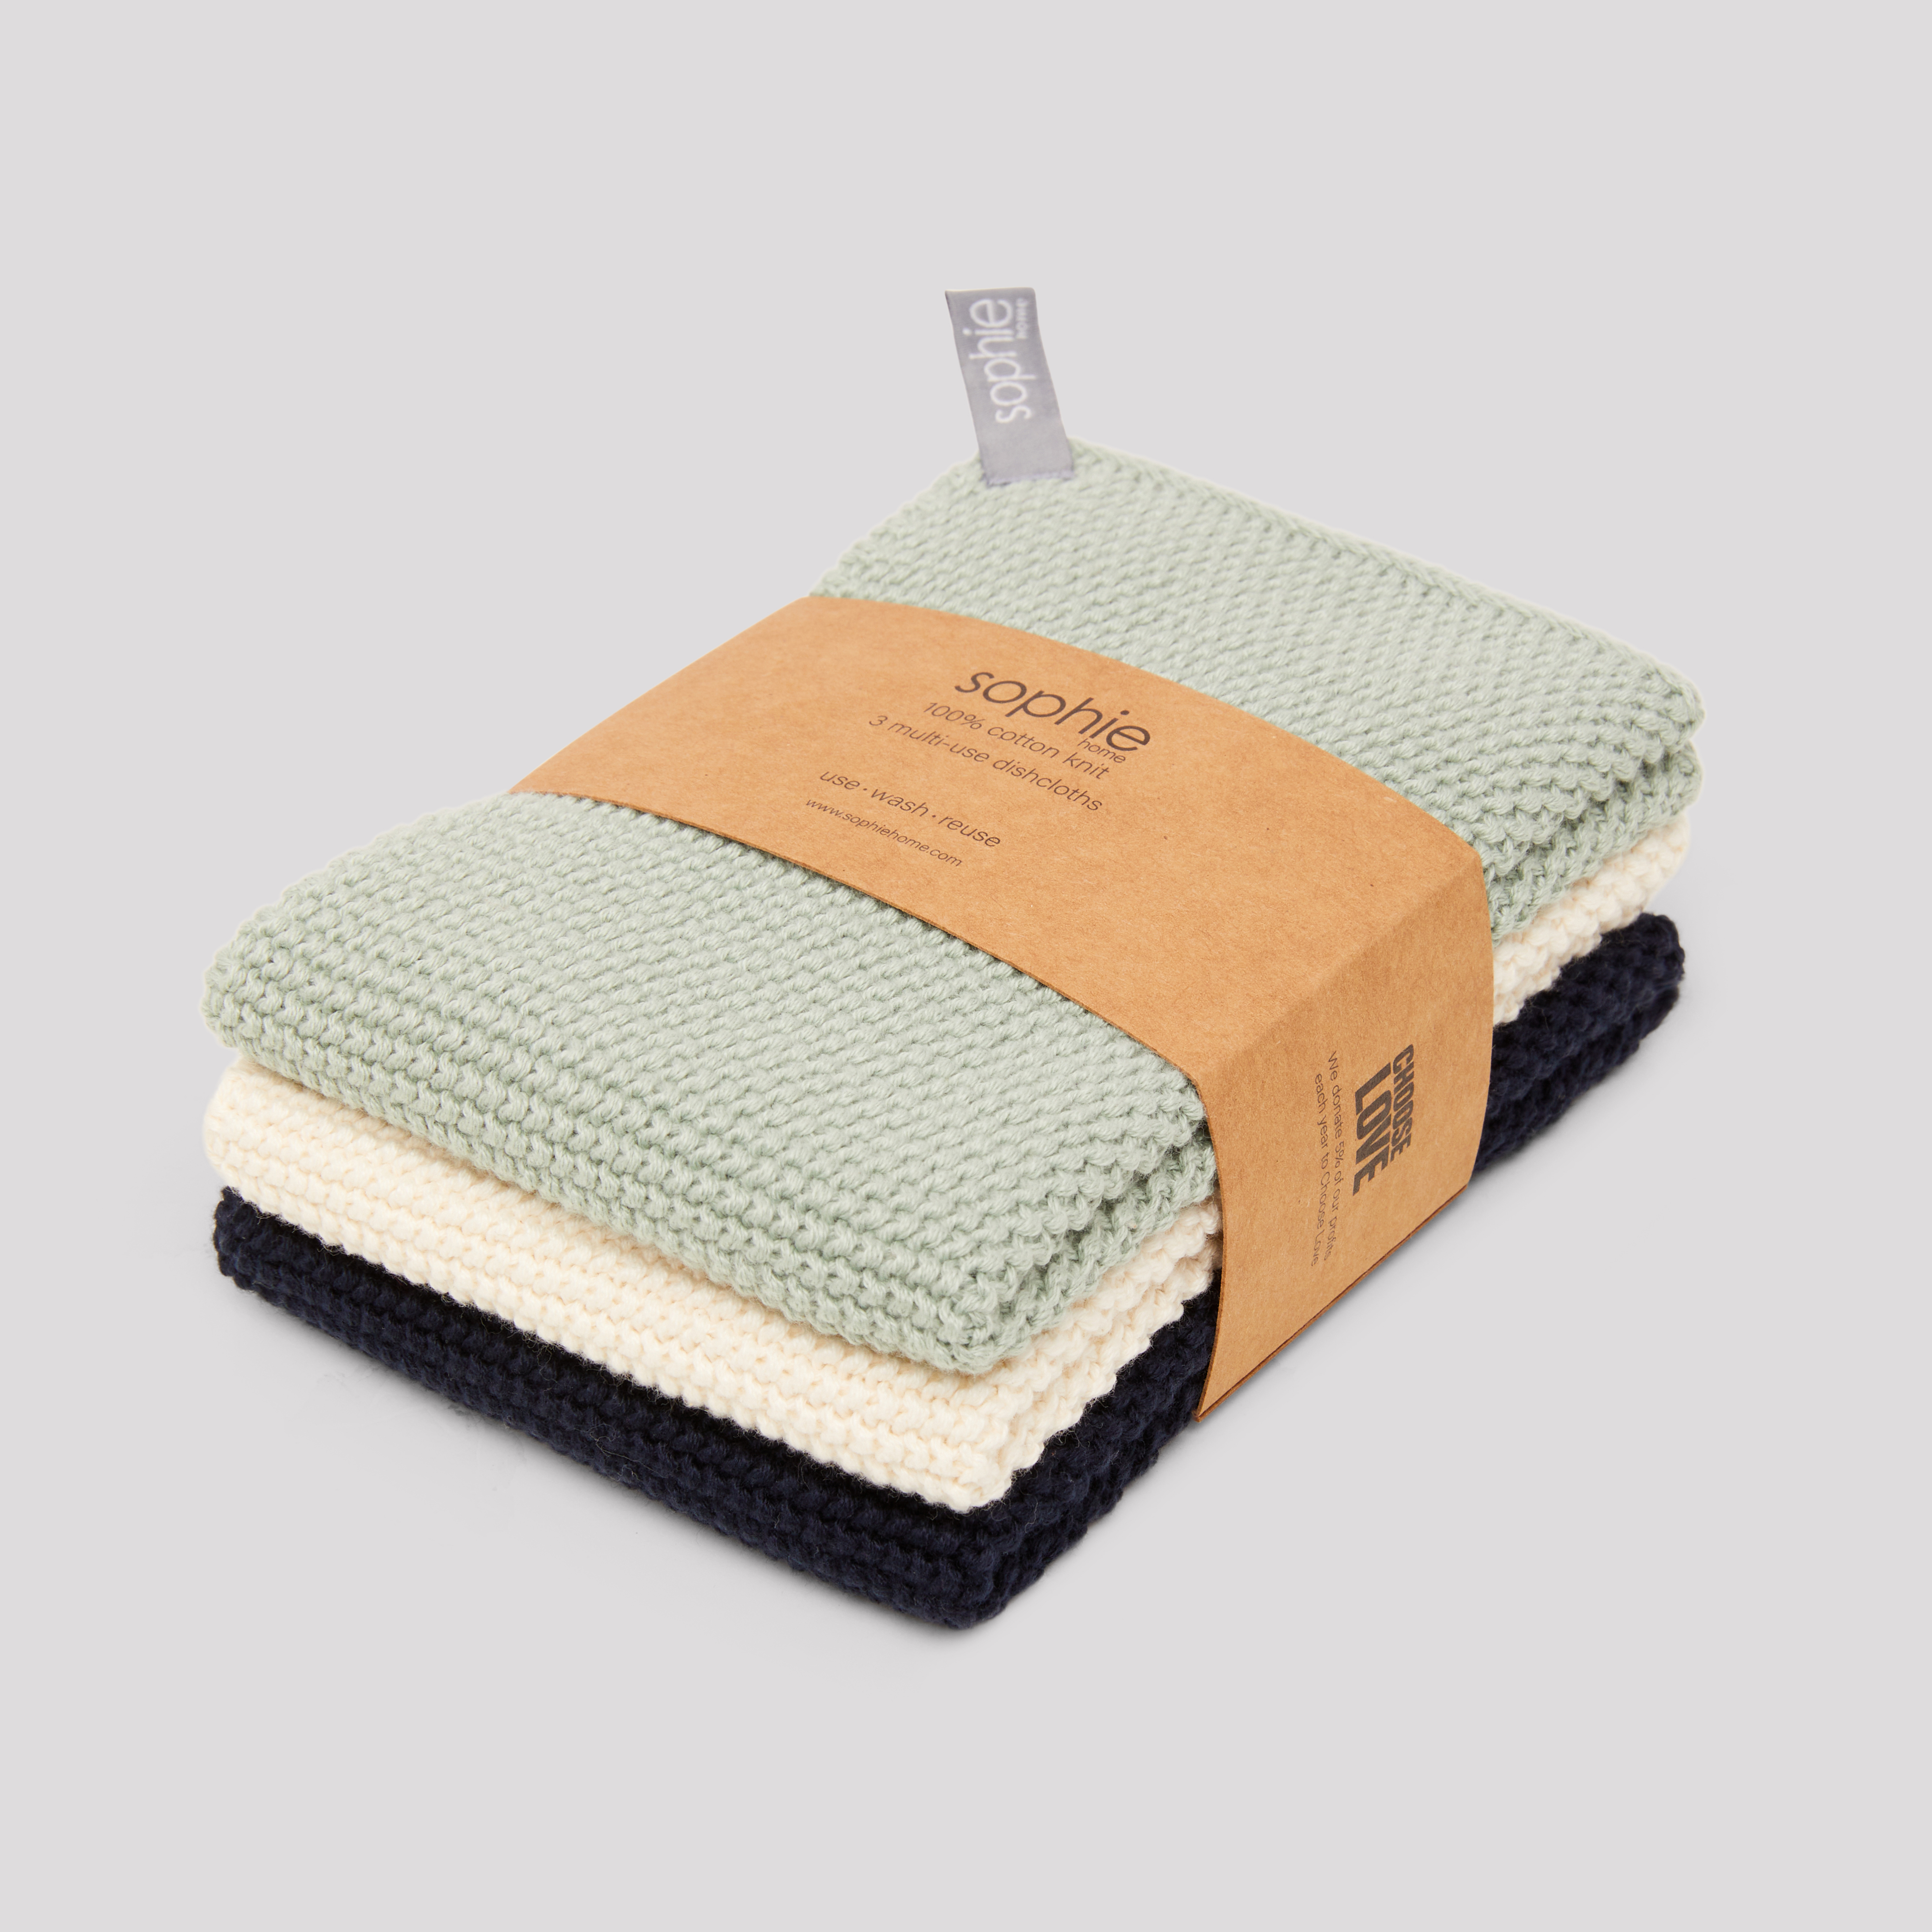 Sophie Home 100% cotton knit dishcloth set